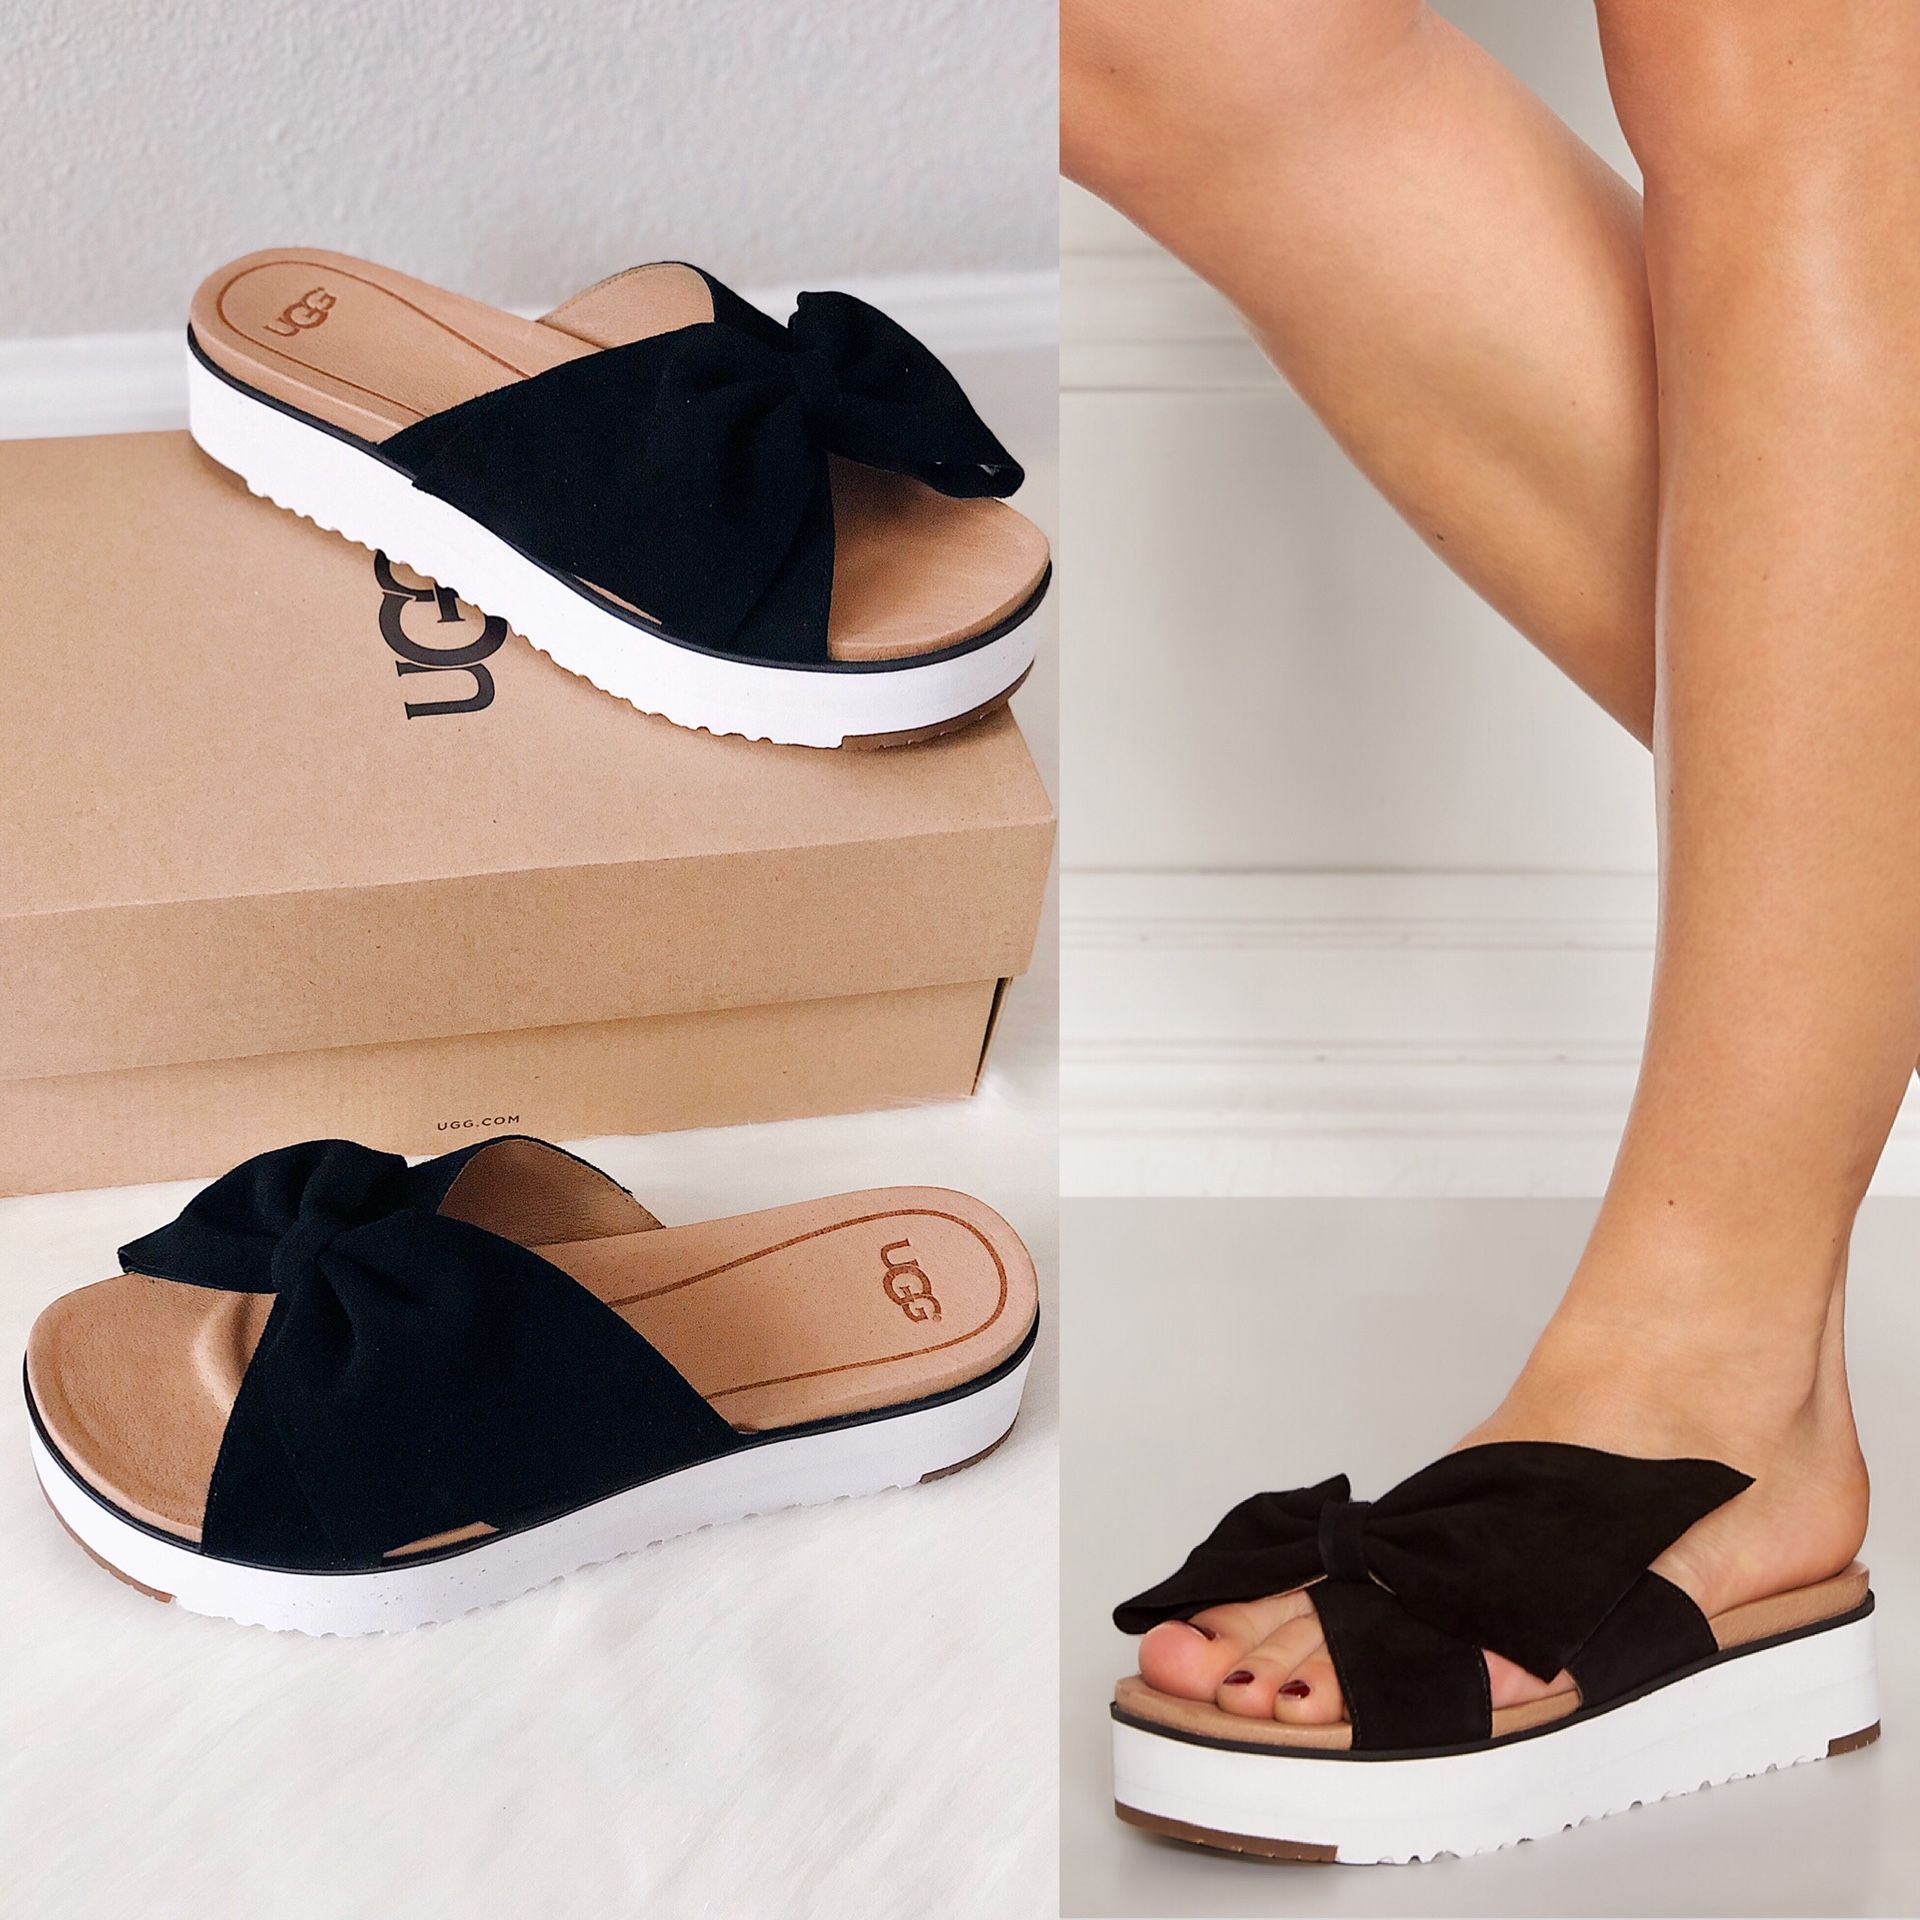 ✨New UGG Joan II Leather Bow Platform Slide Sandals Black Womens Shoes Size 9.5M